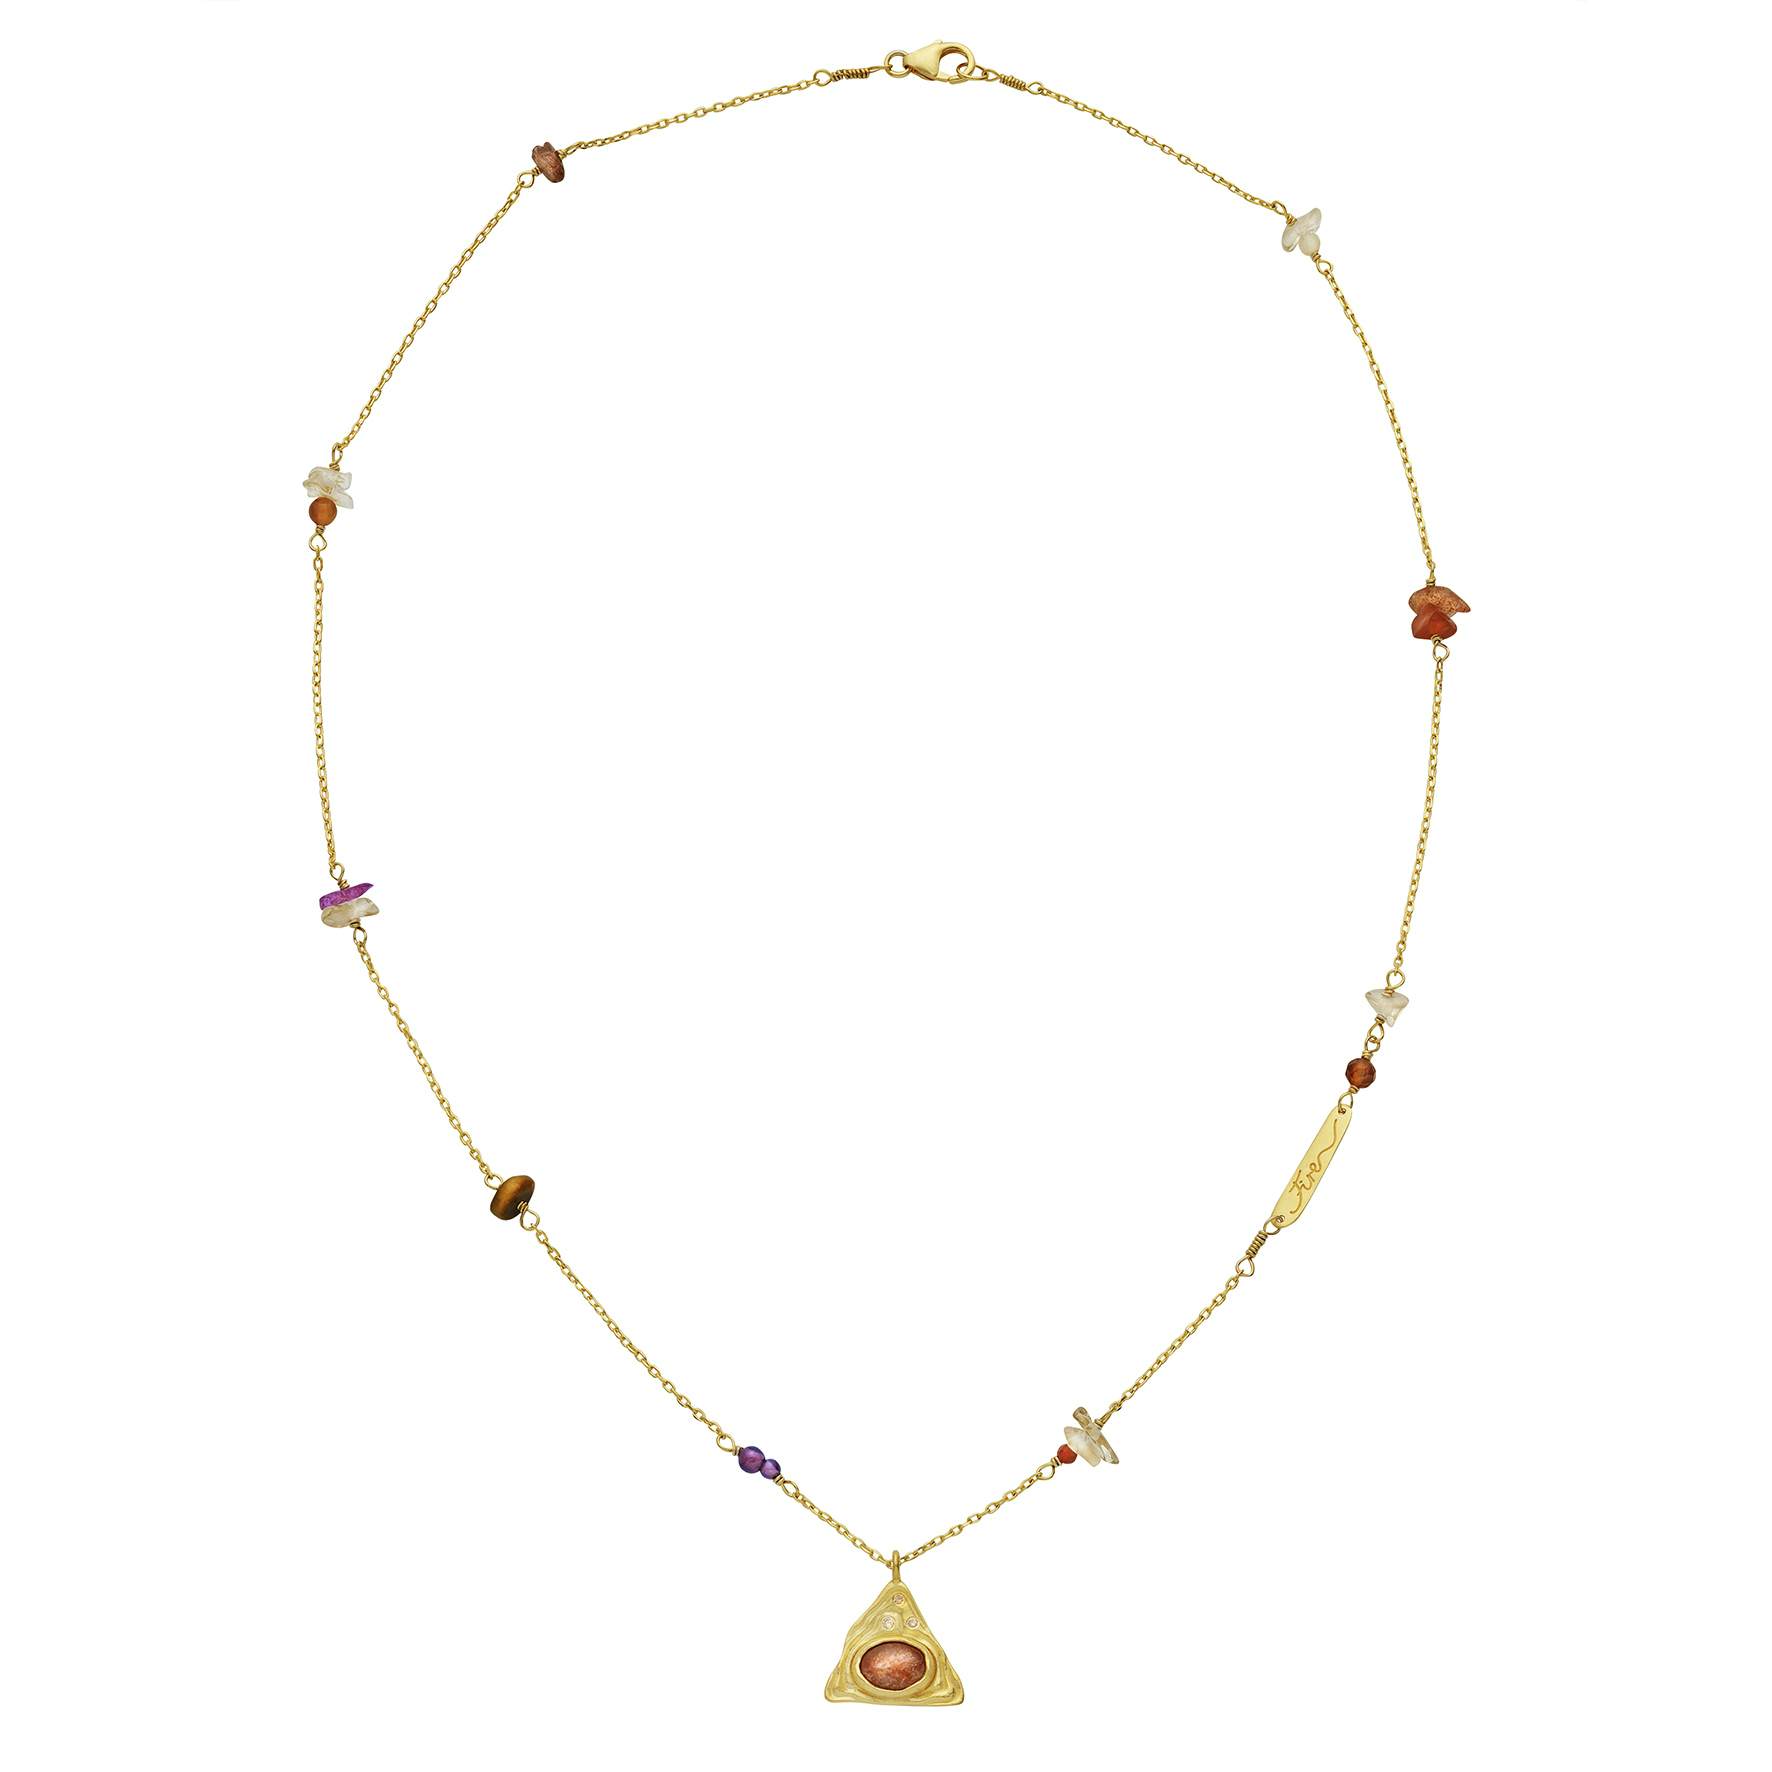 Calida Fire Necklace von Maanesten in Vergoldet-Silber Sterling 925